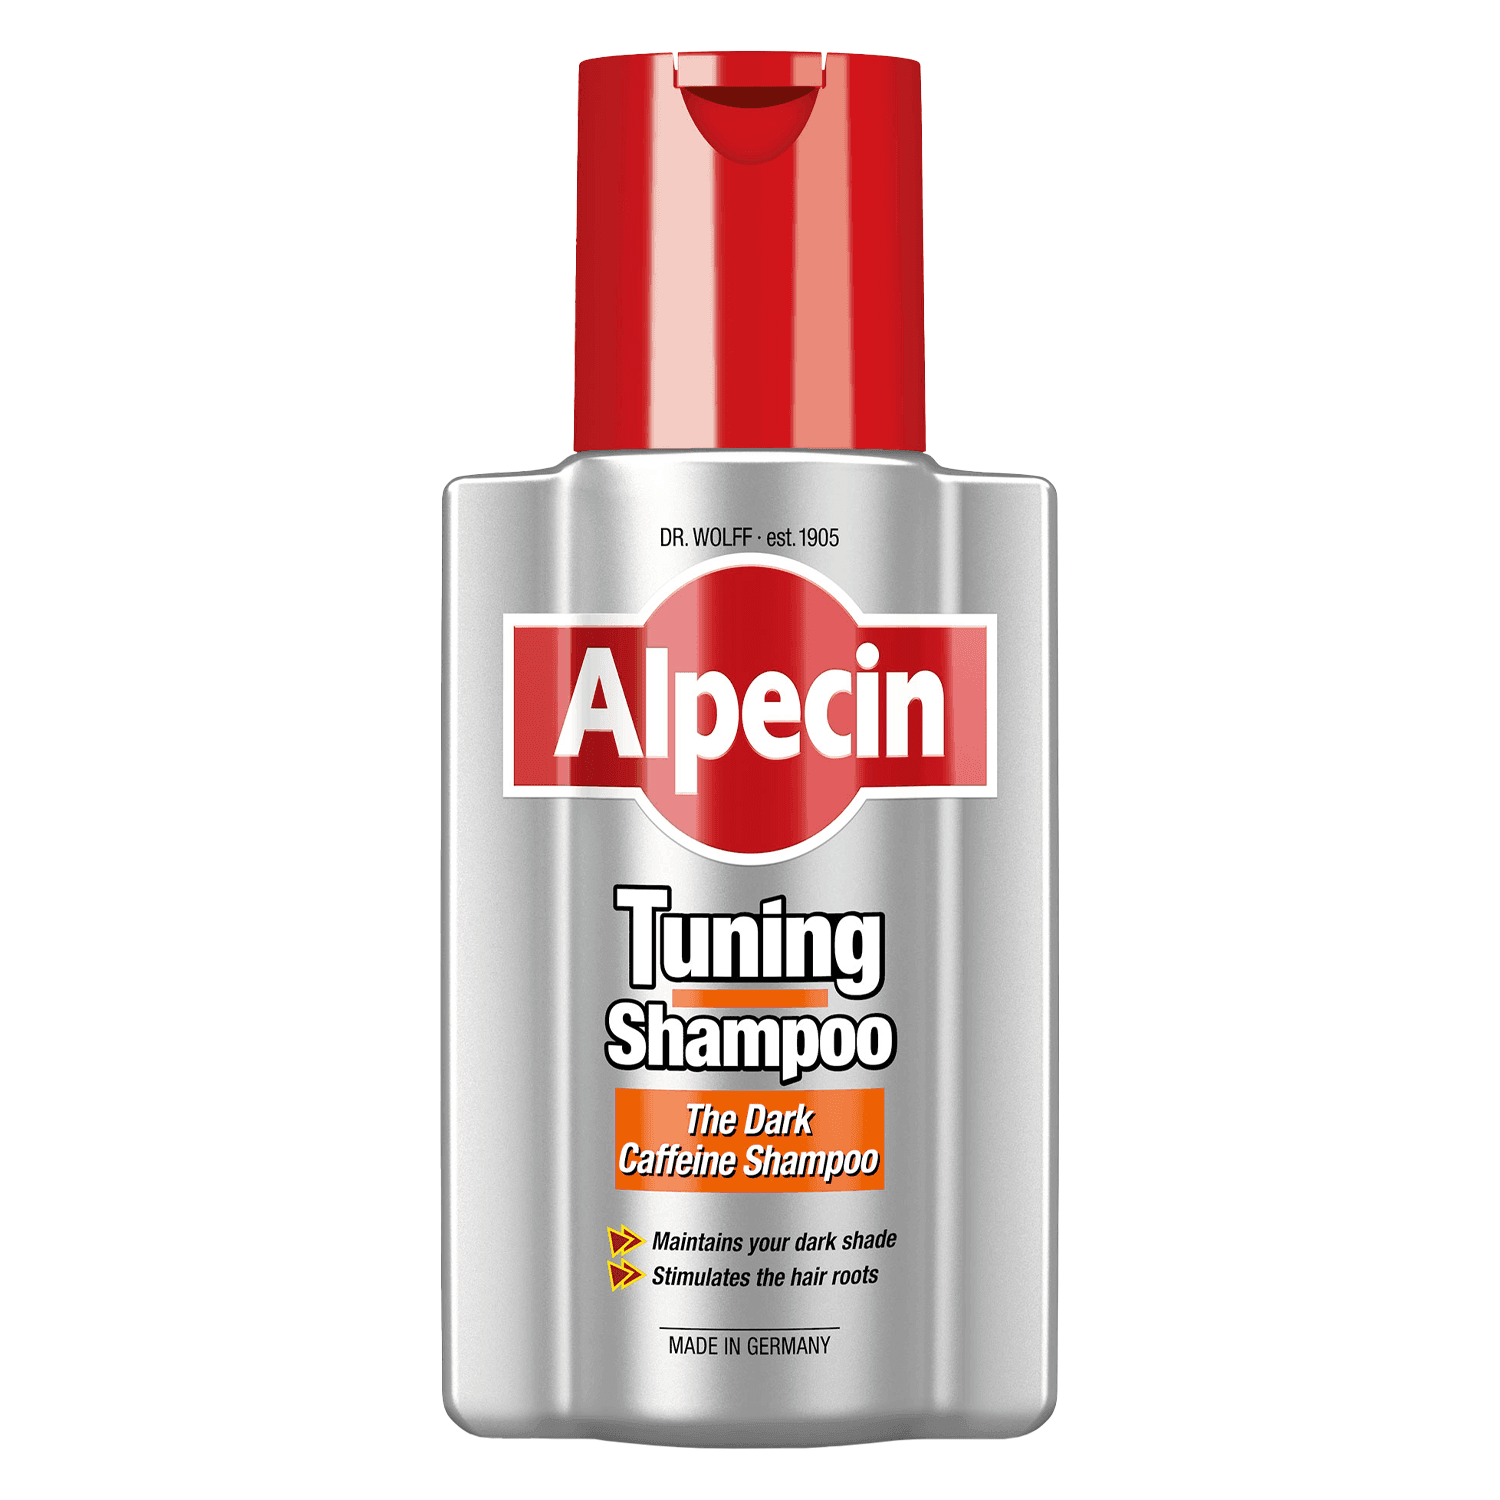 Alpecin - Tuning Shampoo